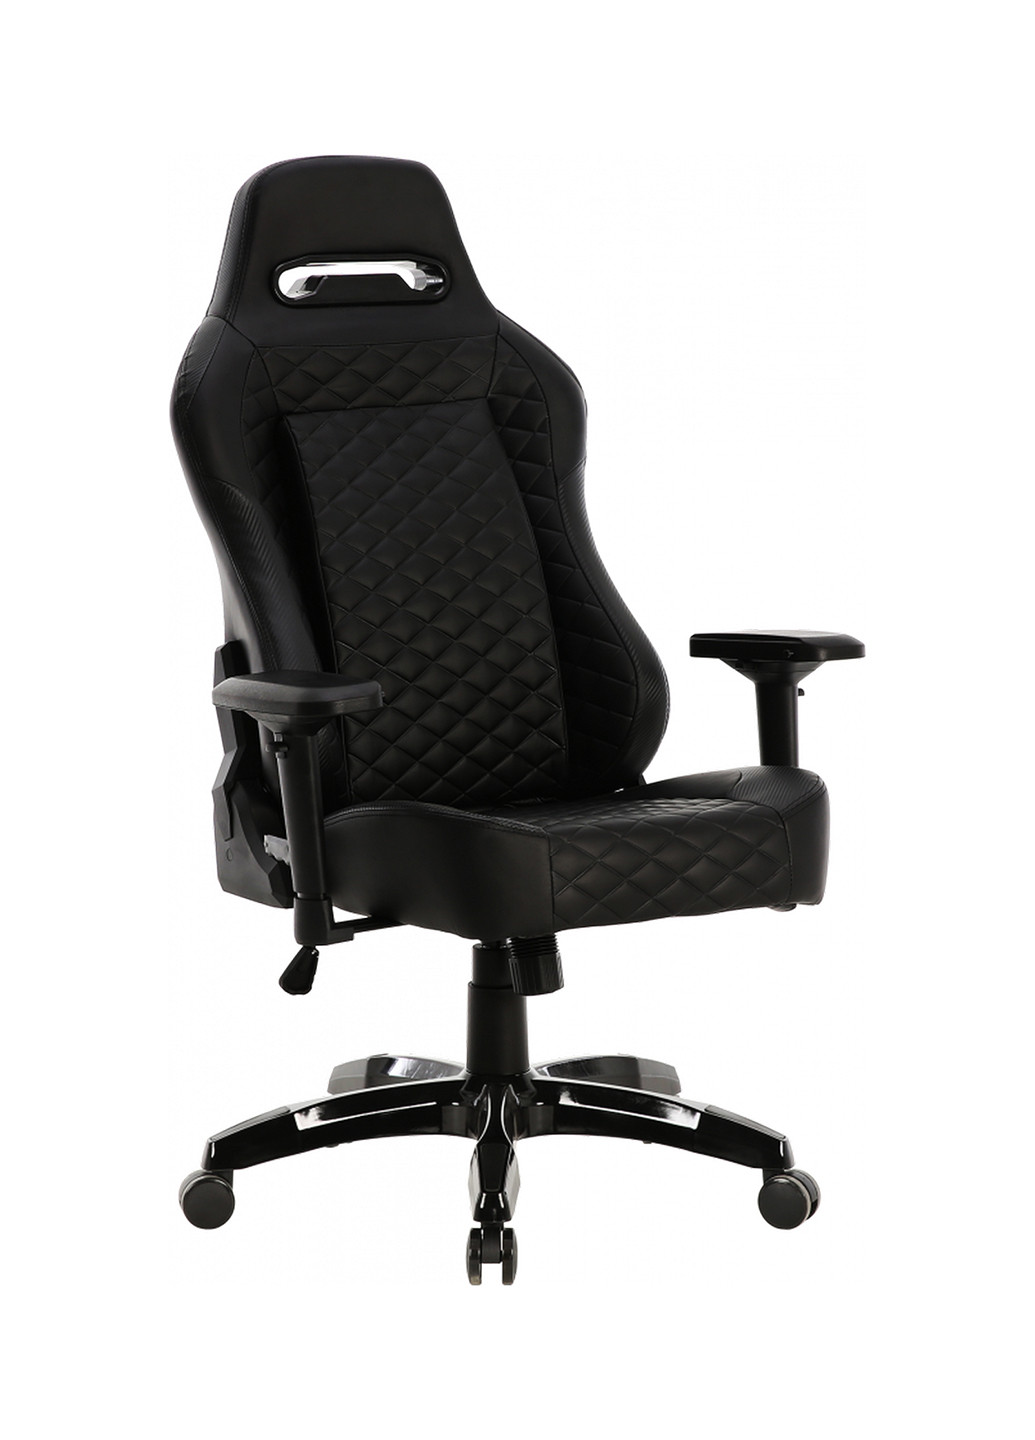 Кресло X-2604-4D Black GT Racer кресло gt racer x-2604-4d black (144664466)